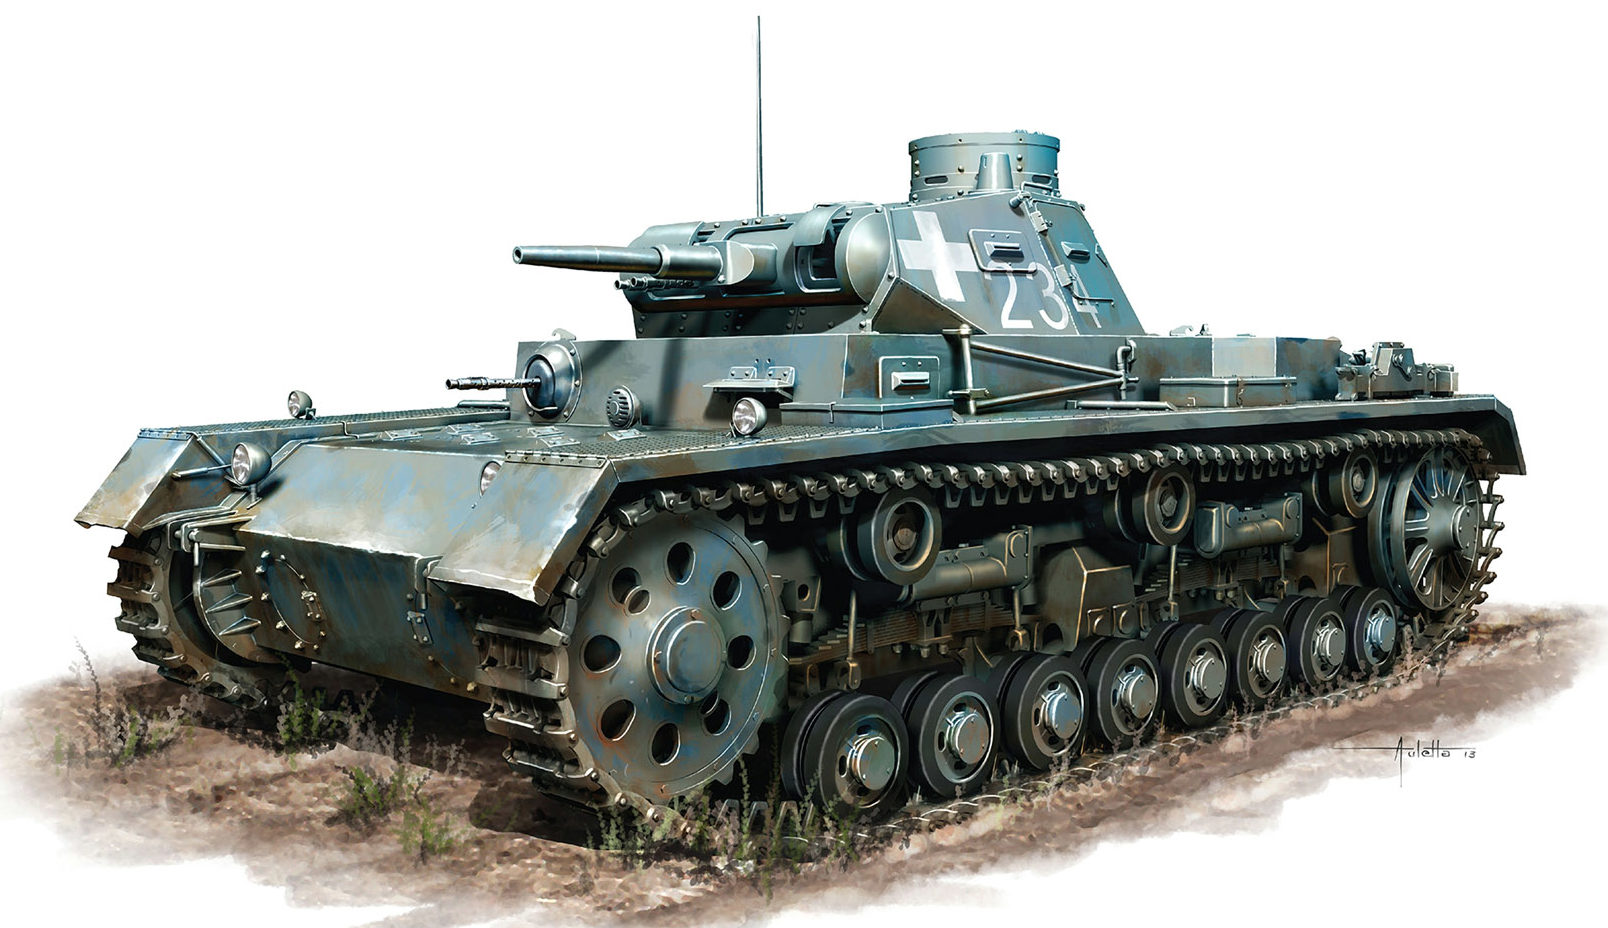 Auletta Vincenzo. Танк Pz.Kpfw. III Ausf. B.